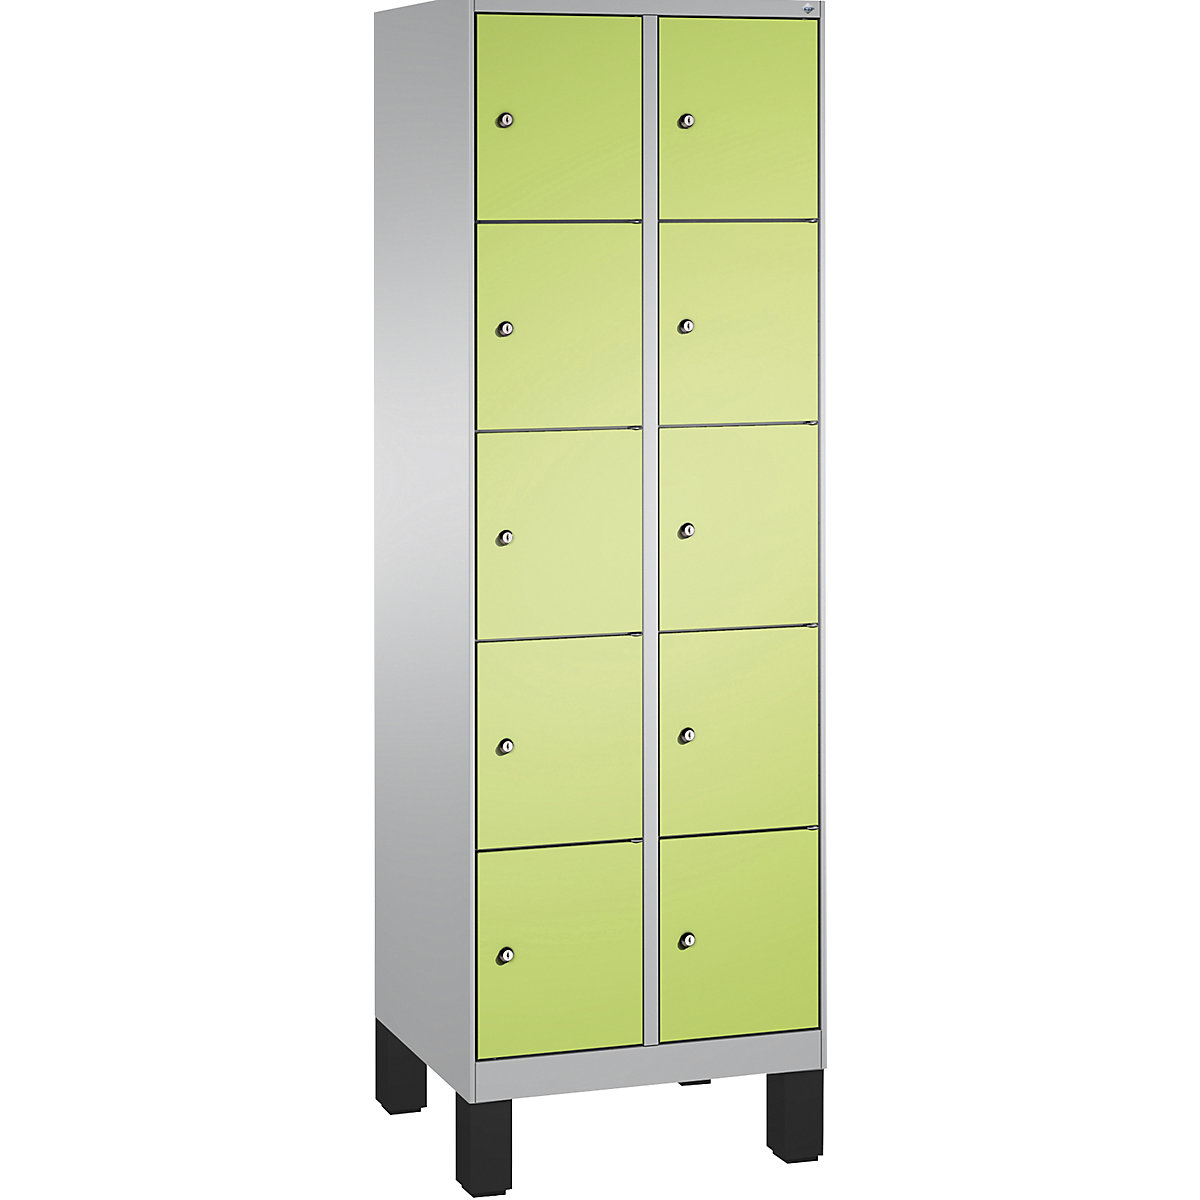 EVOLO locker unit, with feet – C+P, 2 compartments, 5 shelf compartments each, compartment width 300 mm, white aluminium / viridian green-13